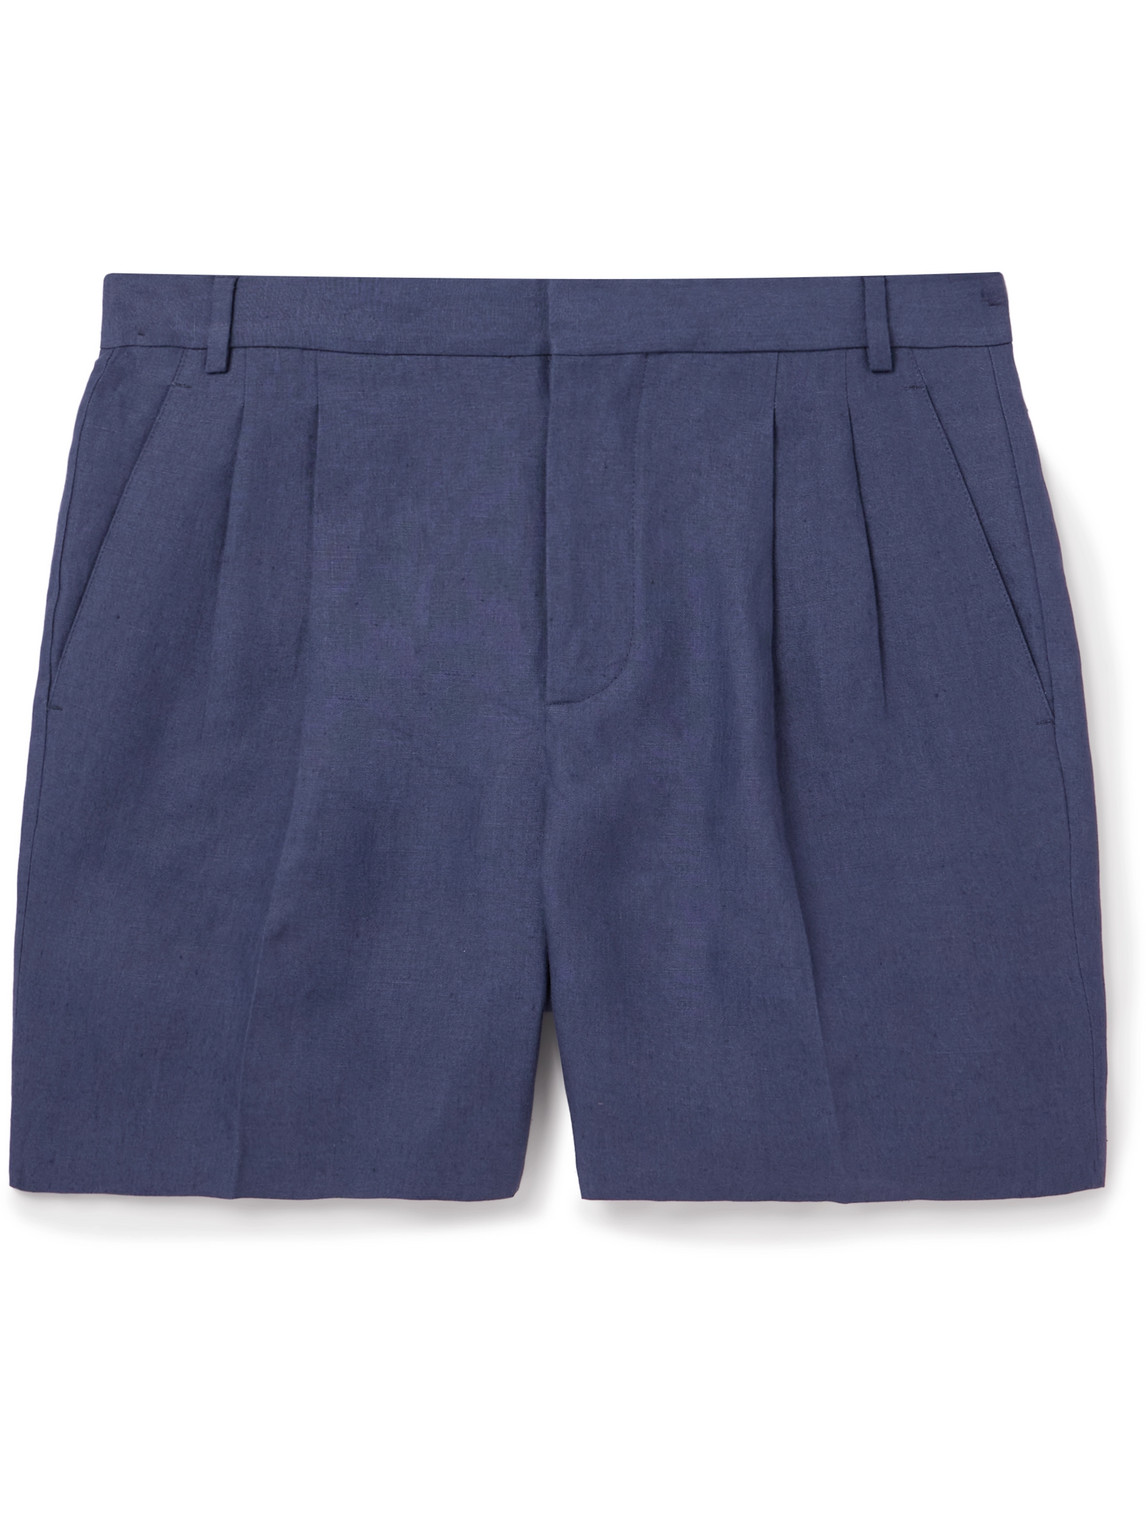 Loro Piana - Honiara Straight-Leg Pleated Linen Bermuda Shorts - Men - Blue - L von Loro Piana